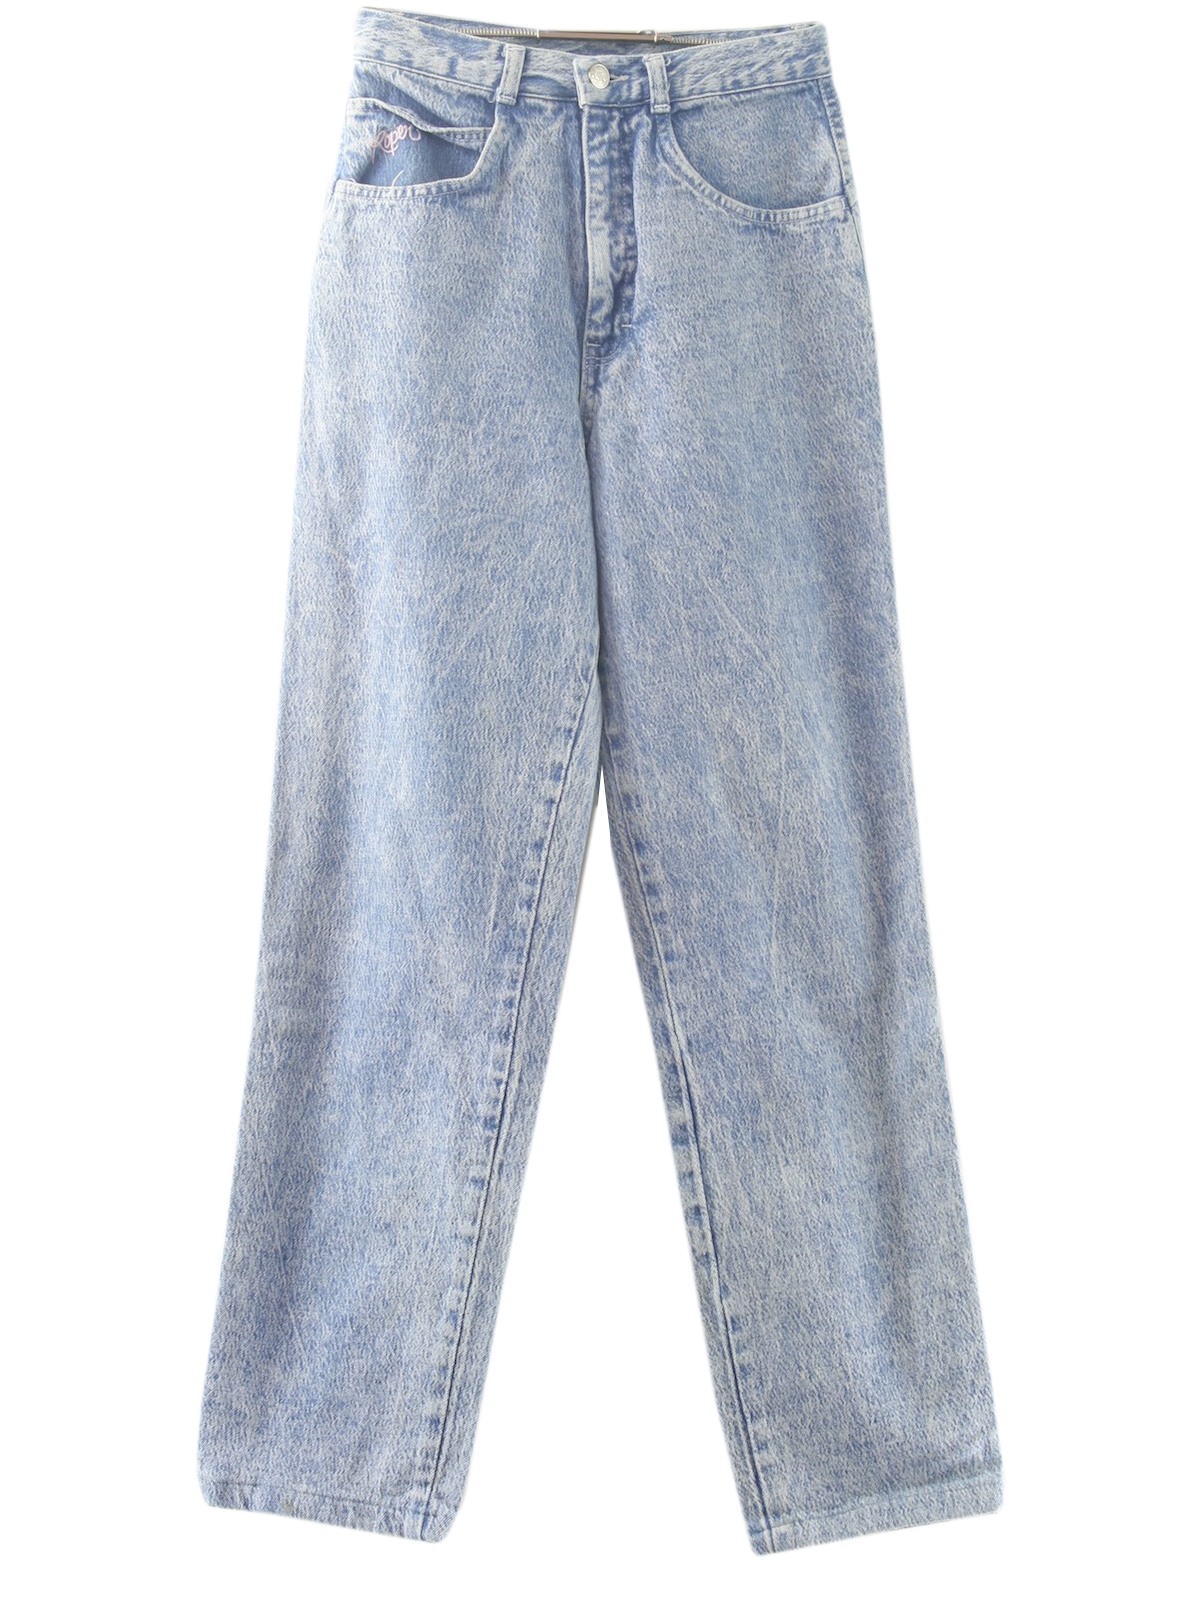 90s Retro Pants: 90s -Roper- Womens blue background, acid washed cotton ...